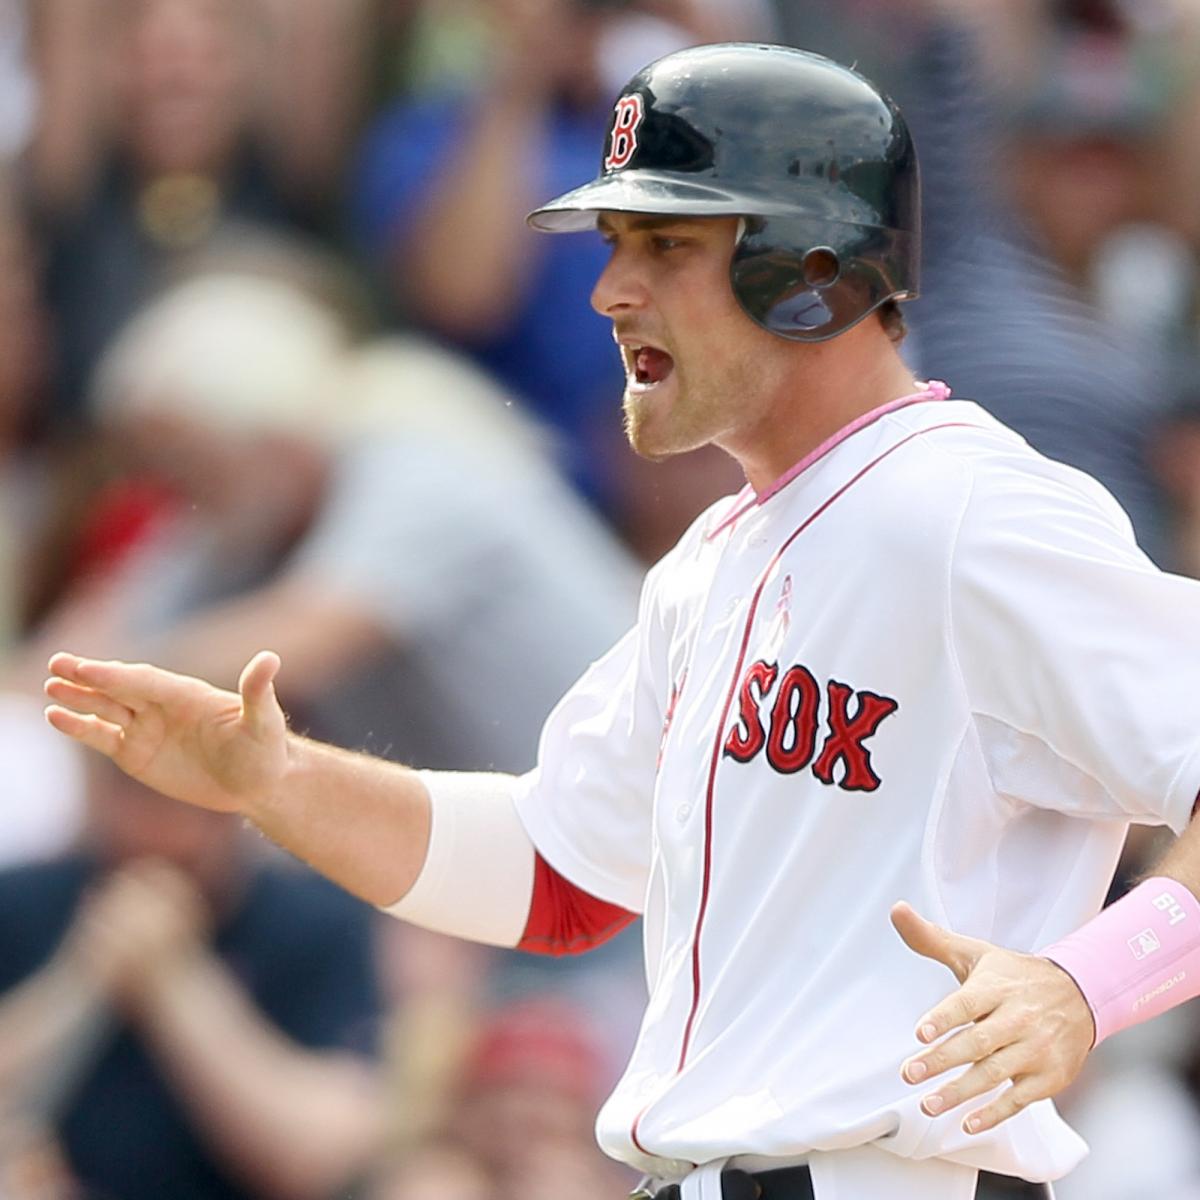 Boston Red Sox vs. Washington Nationals Series Will Showcase MLB's